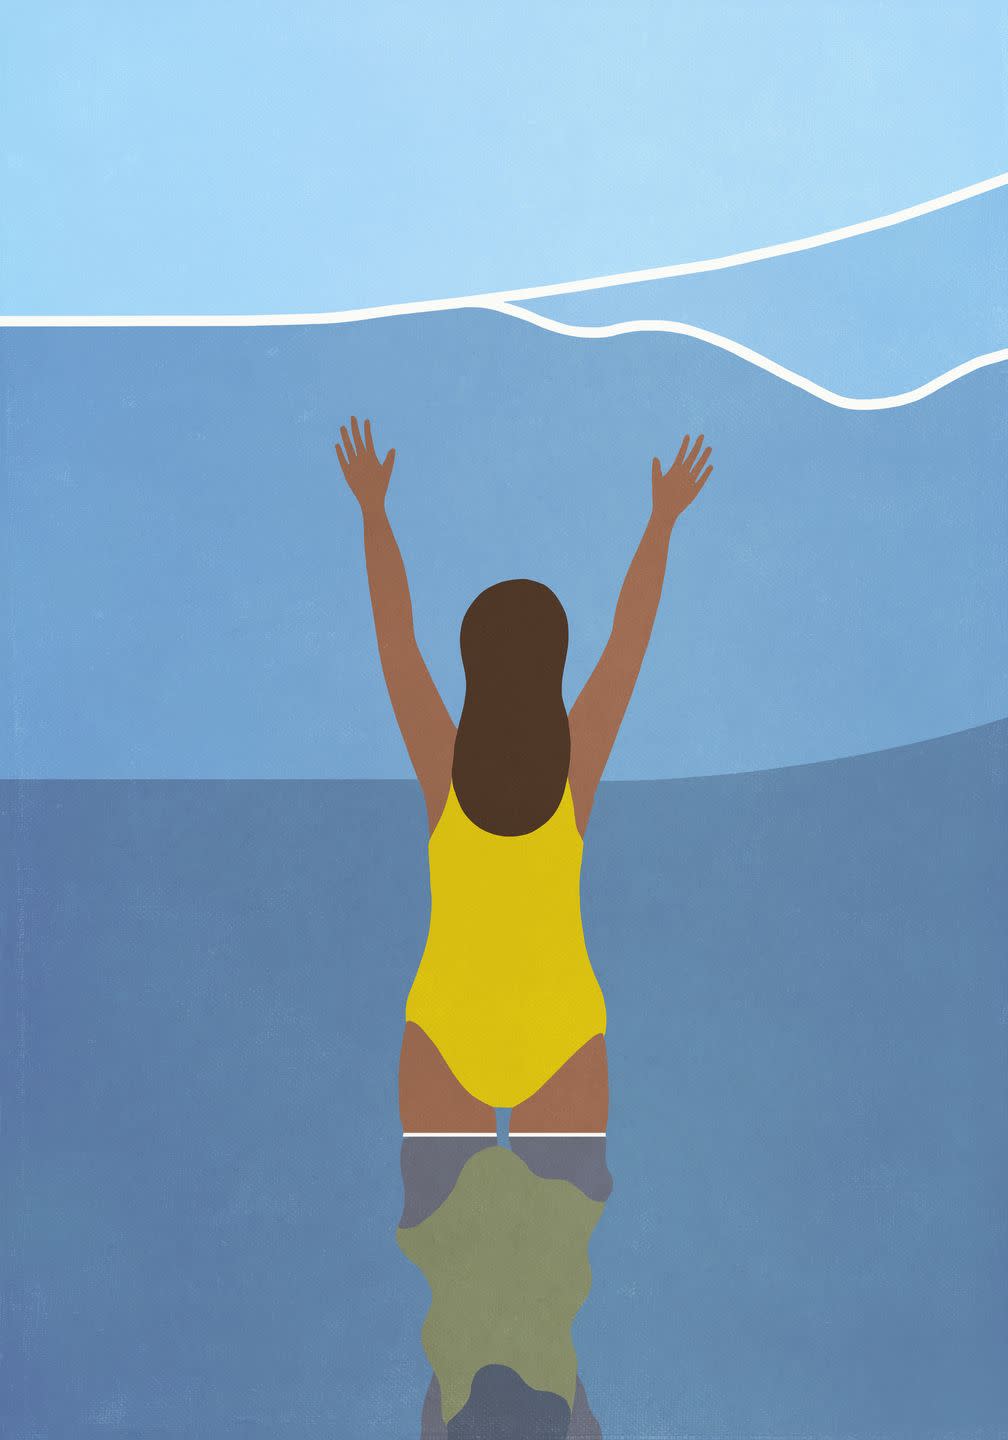 happy woman in bathing suit wading in blue ocean